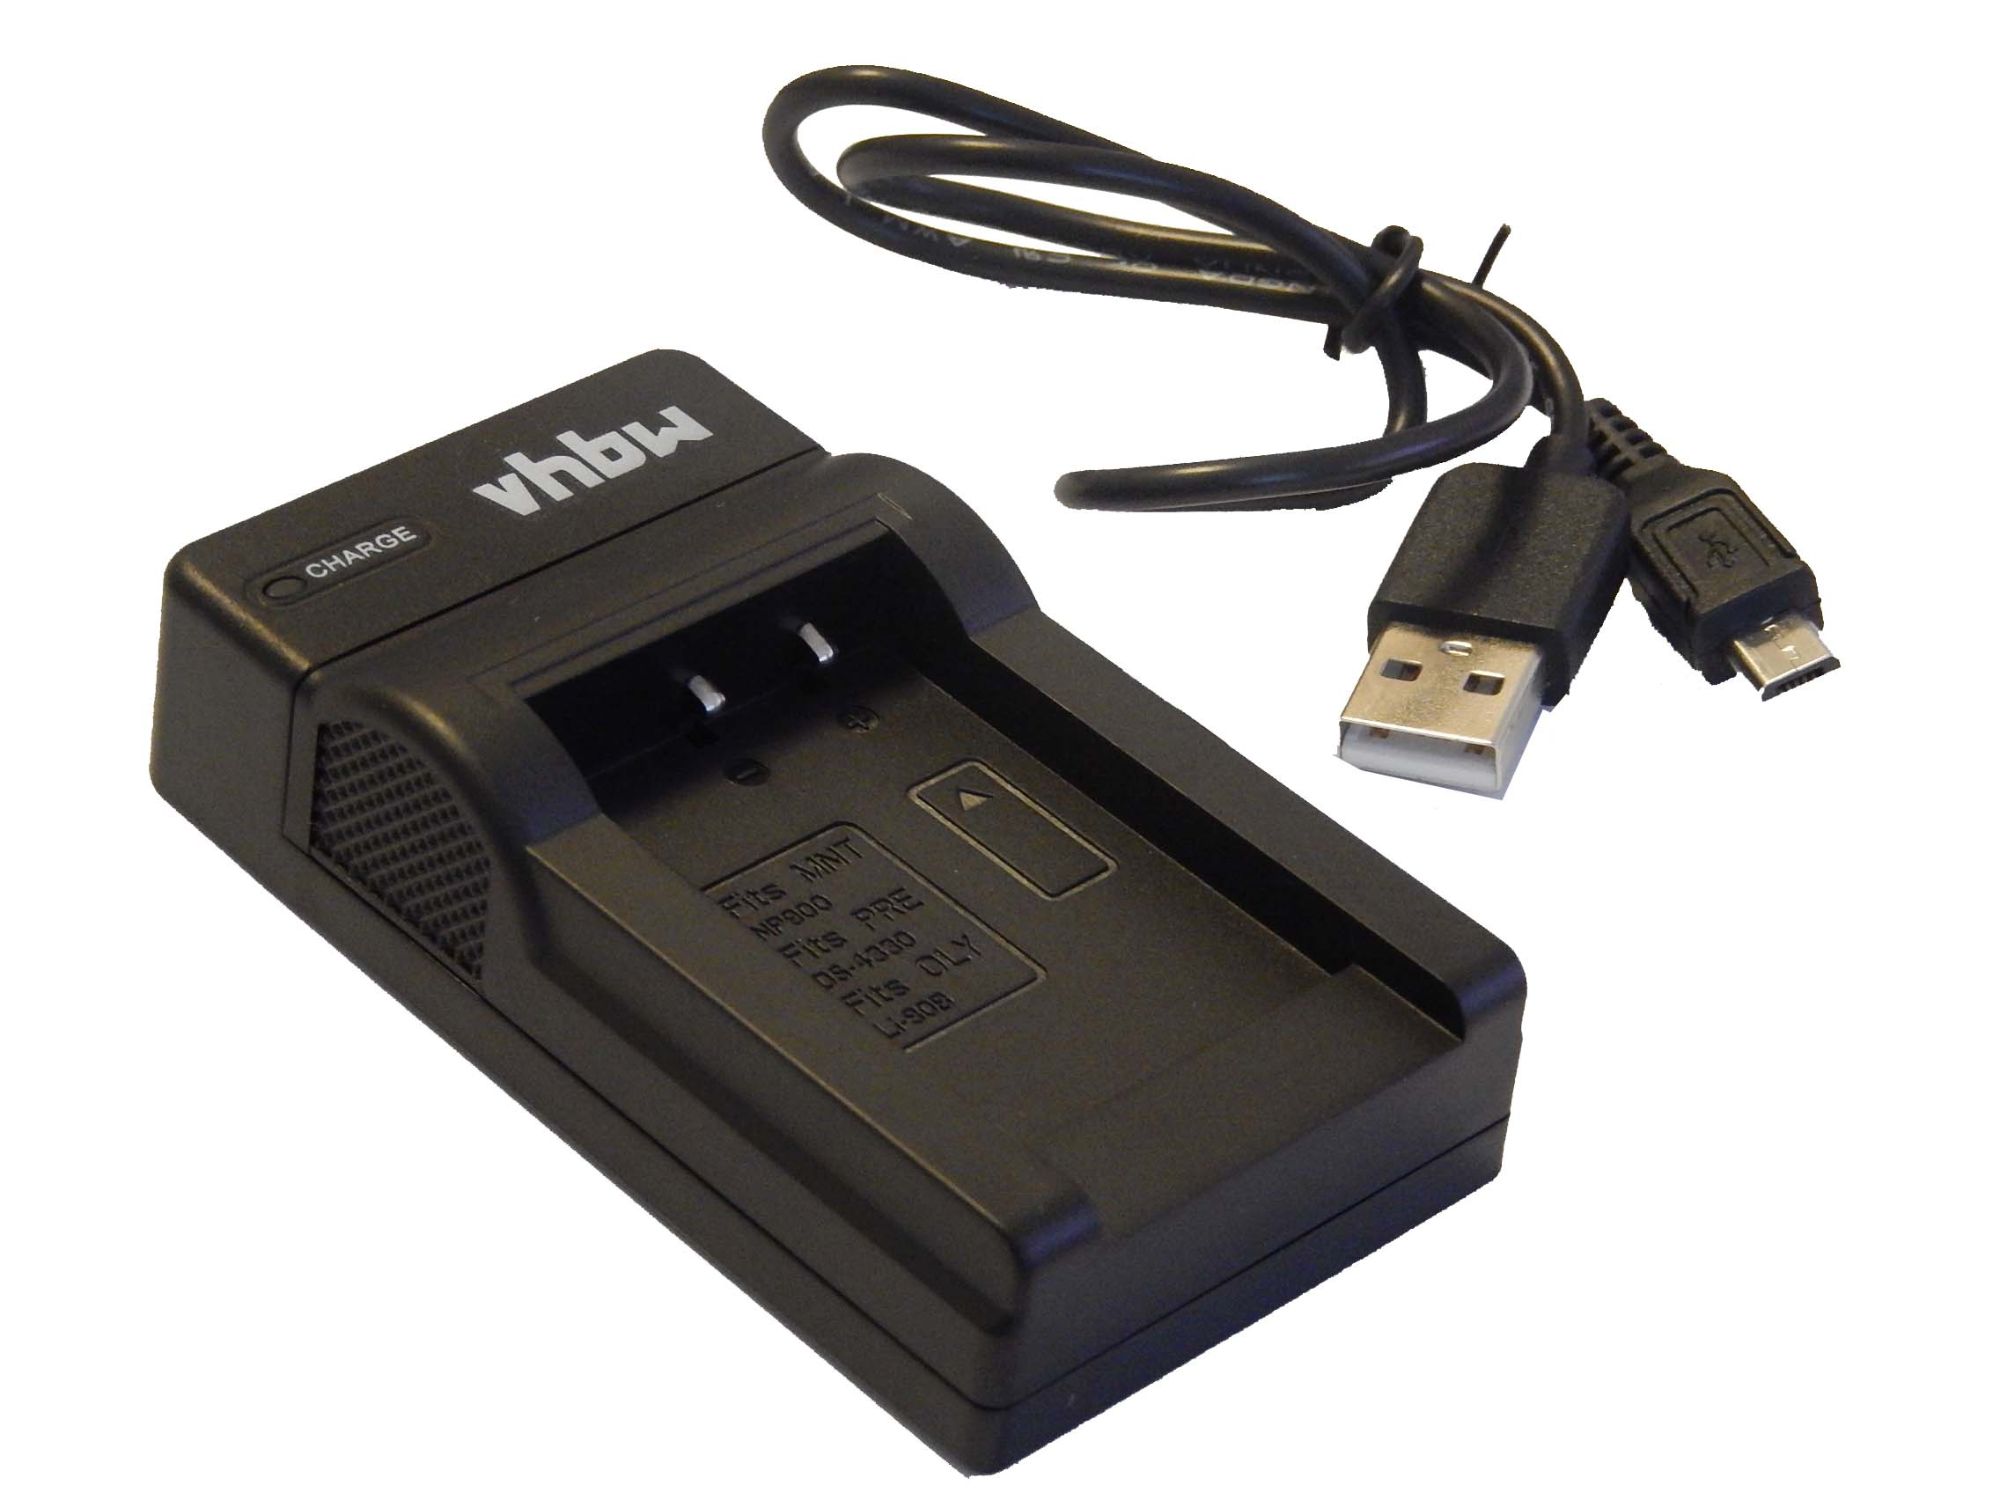 vhbw chargeur USB câble compatible avec Casio Exilim EX-G1, EX-H5, EX-H50, EX-N1, EX-N10, EX-N20 caméra